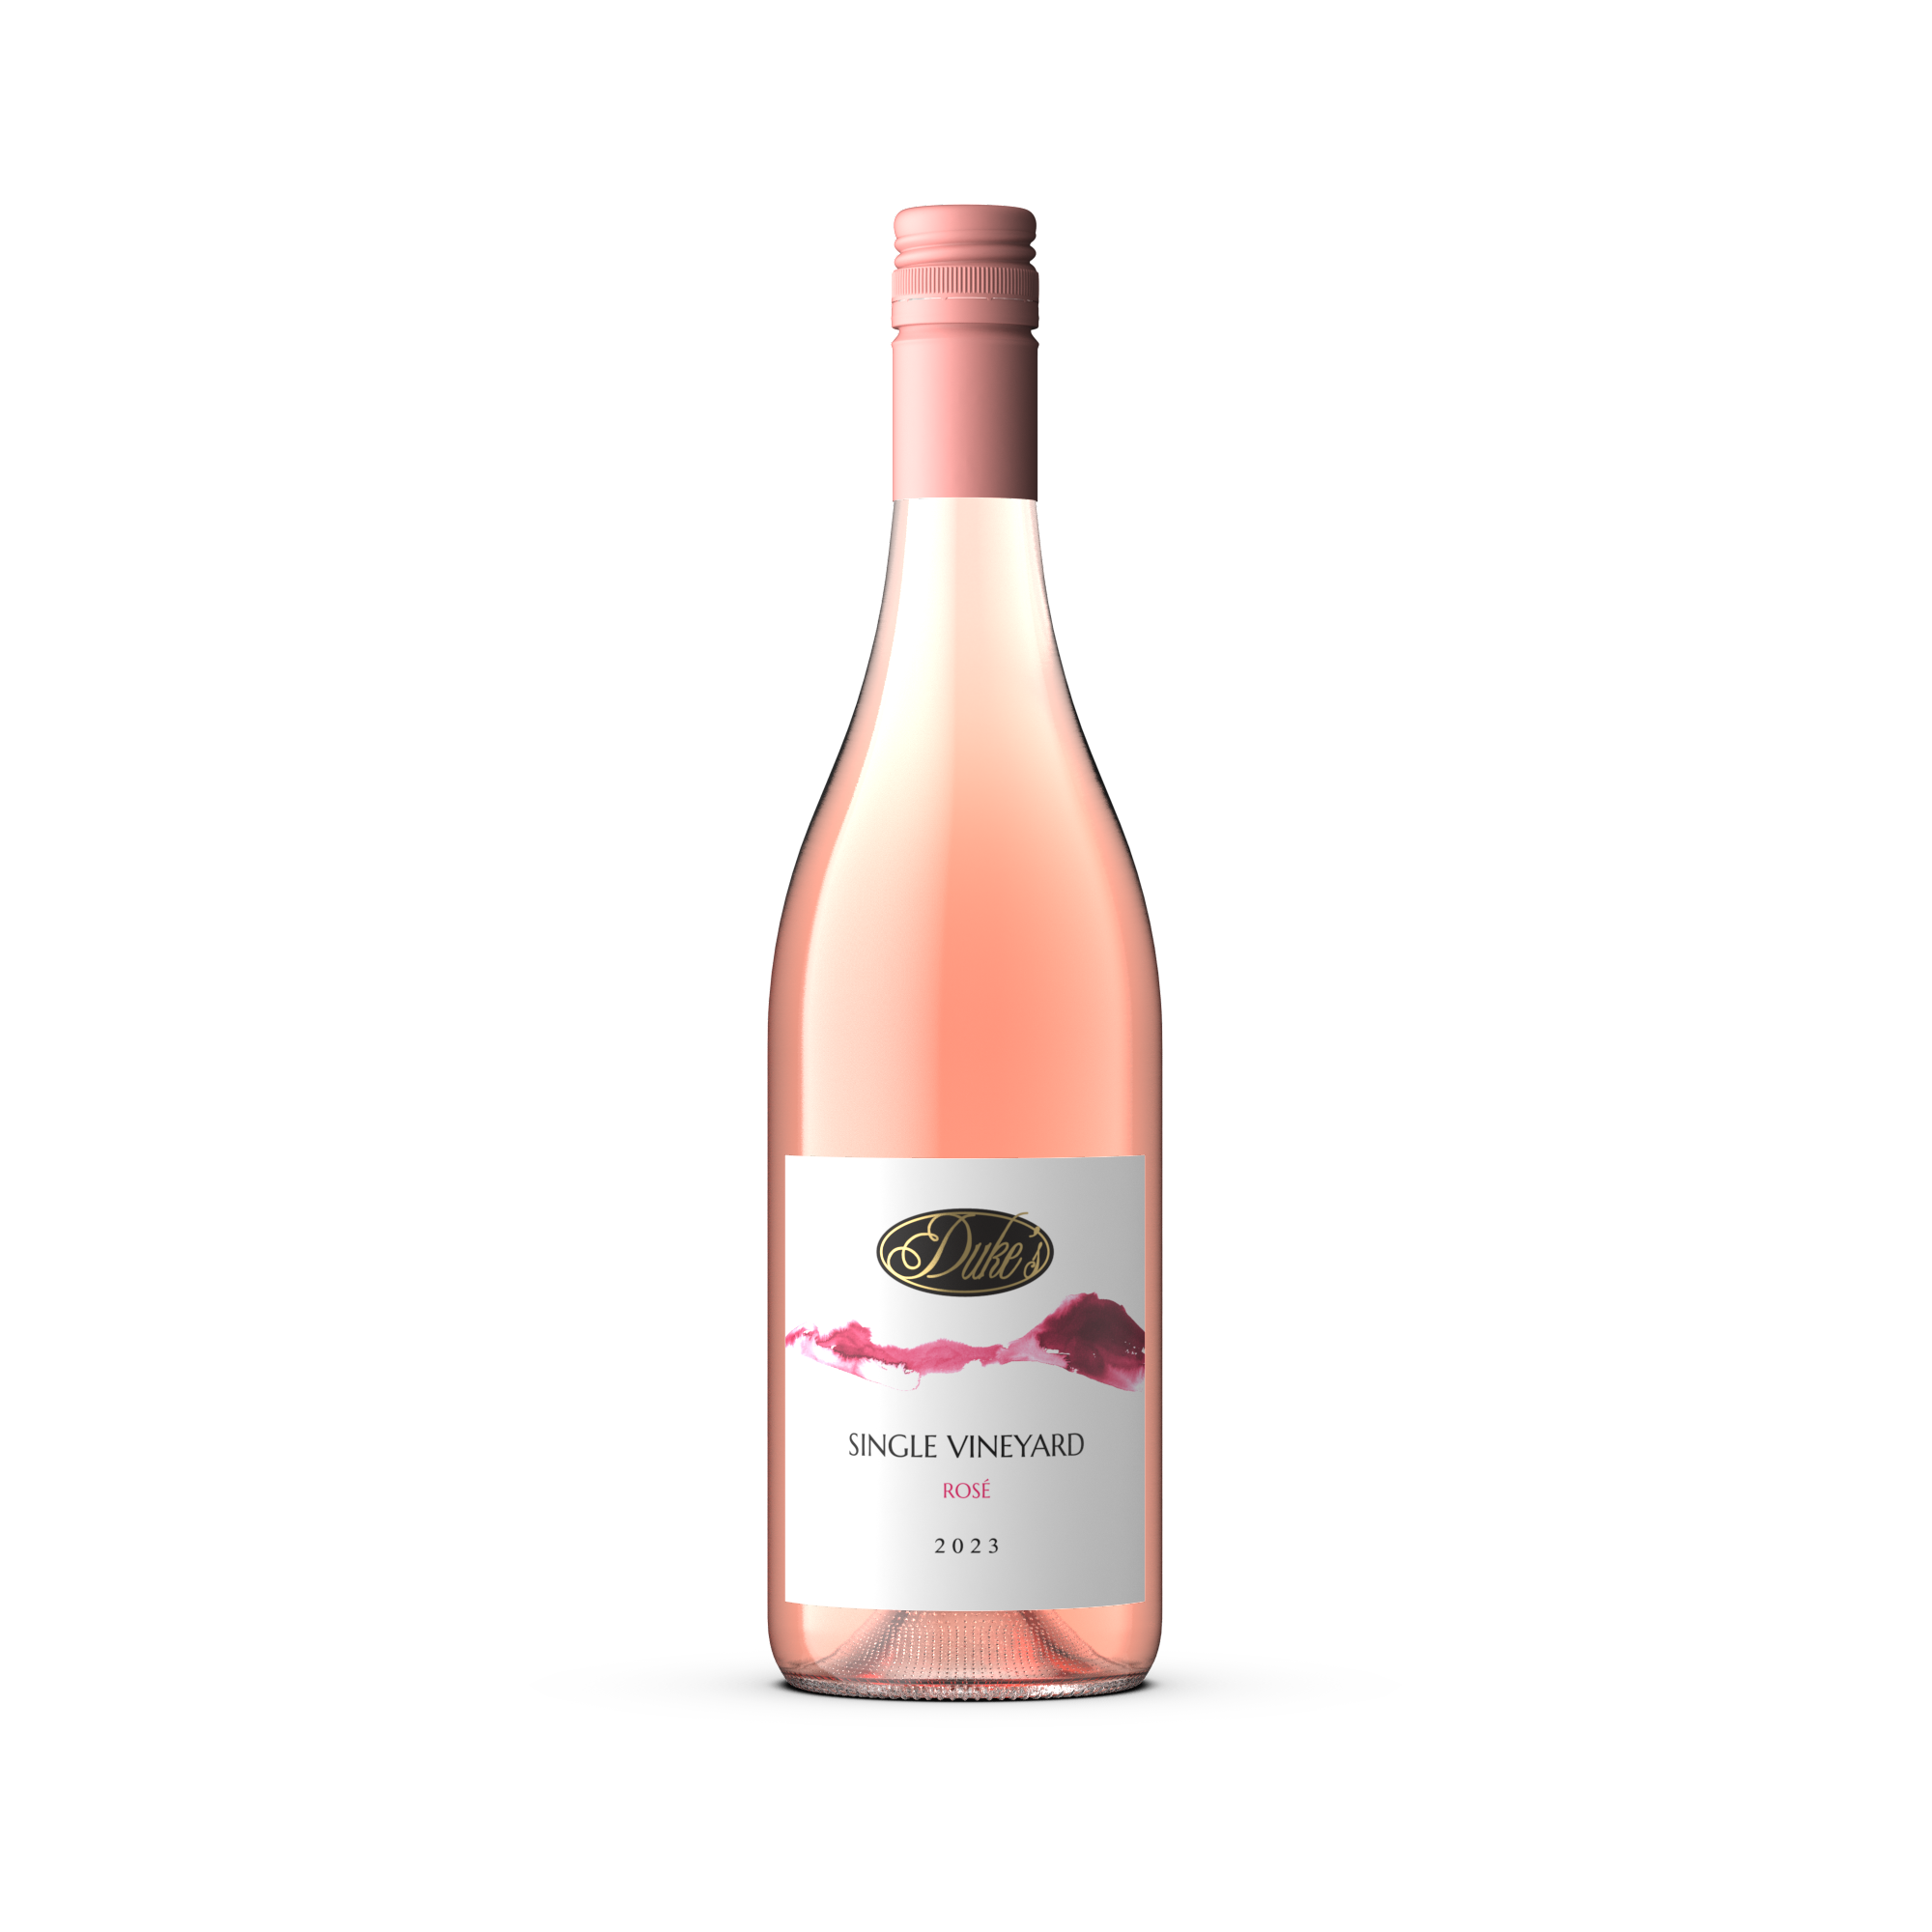 gle Vineyard Rosé 2023 Bottle